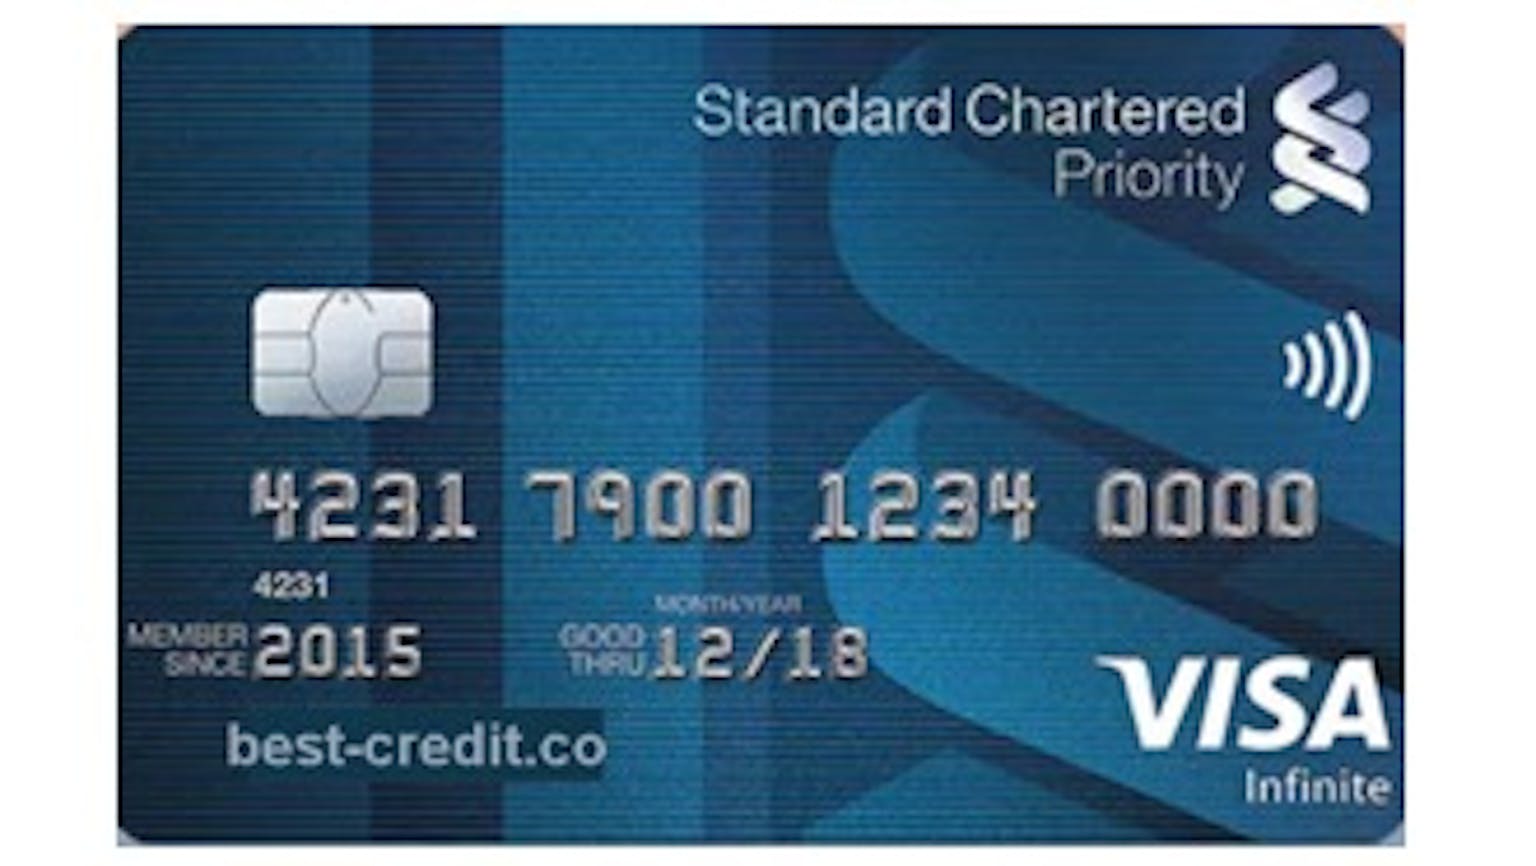 Standard Chartered Priority VISA Infinite Card